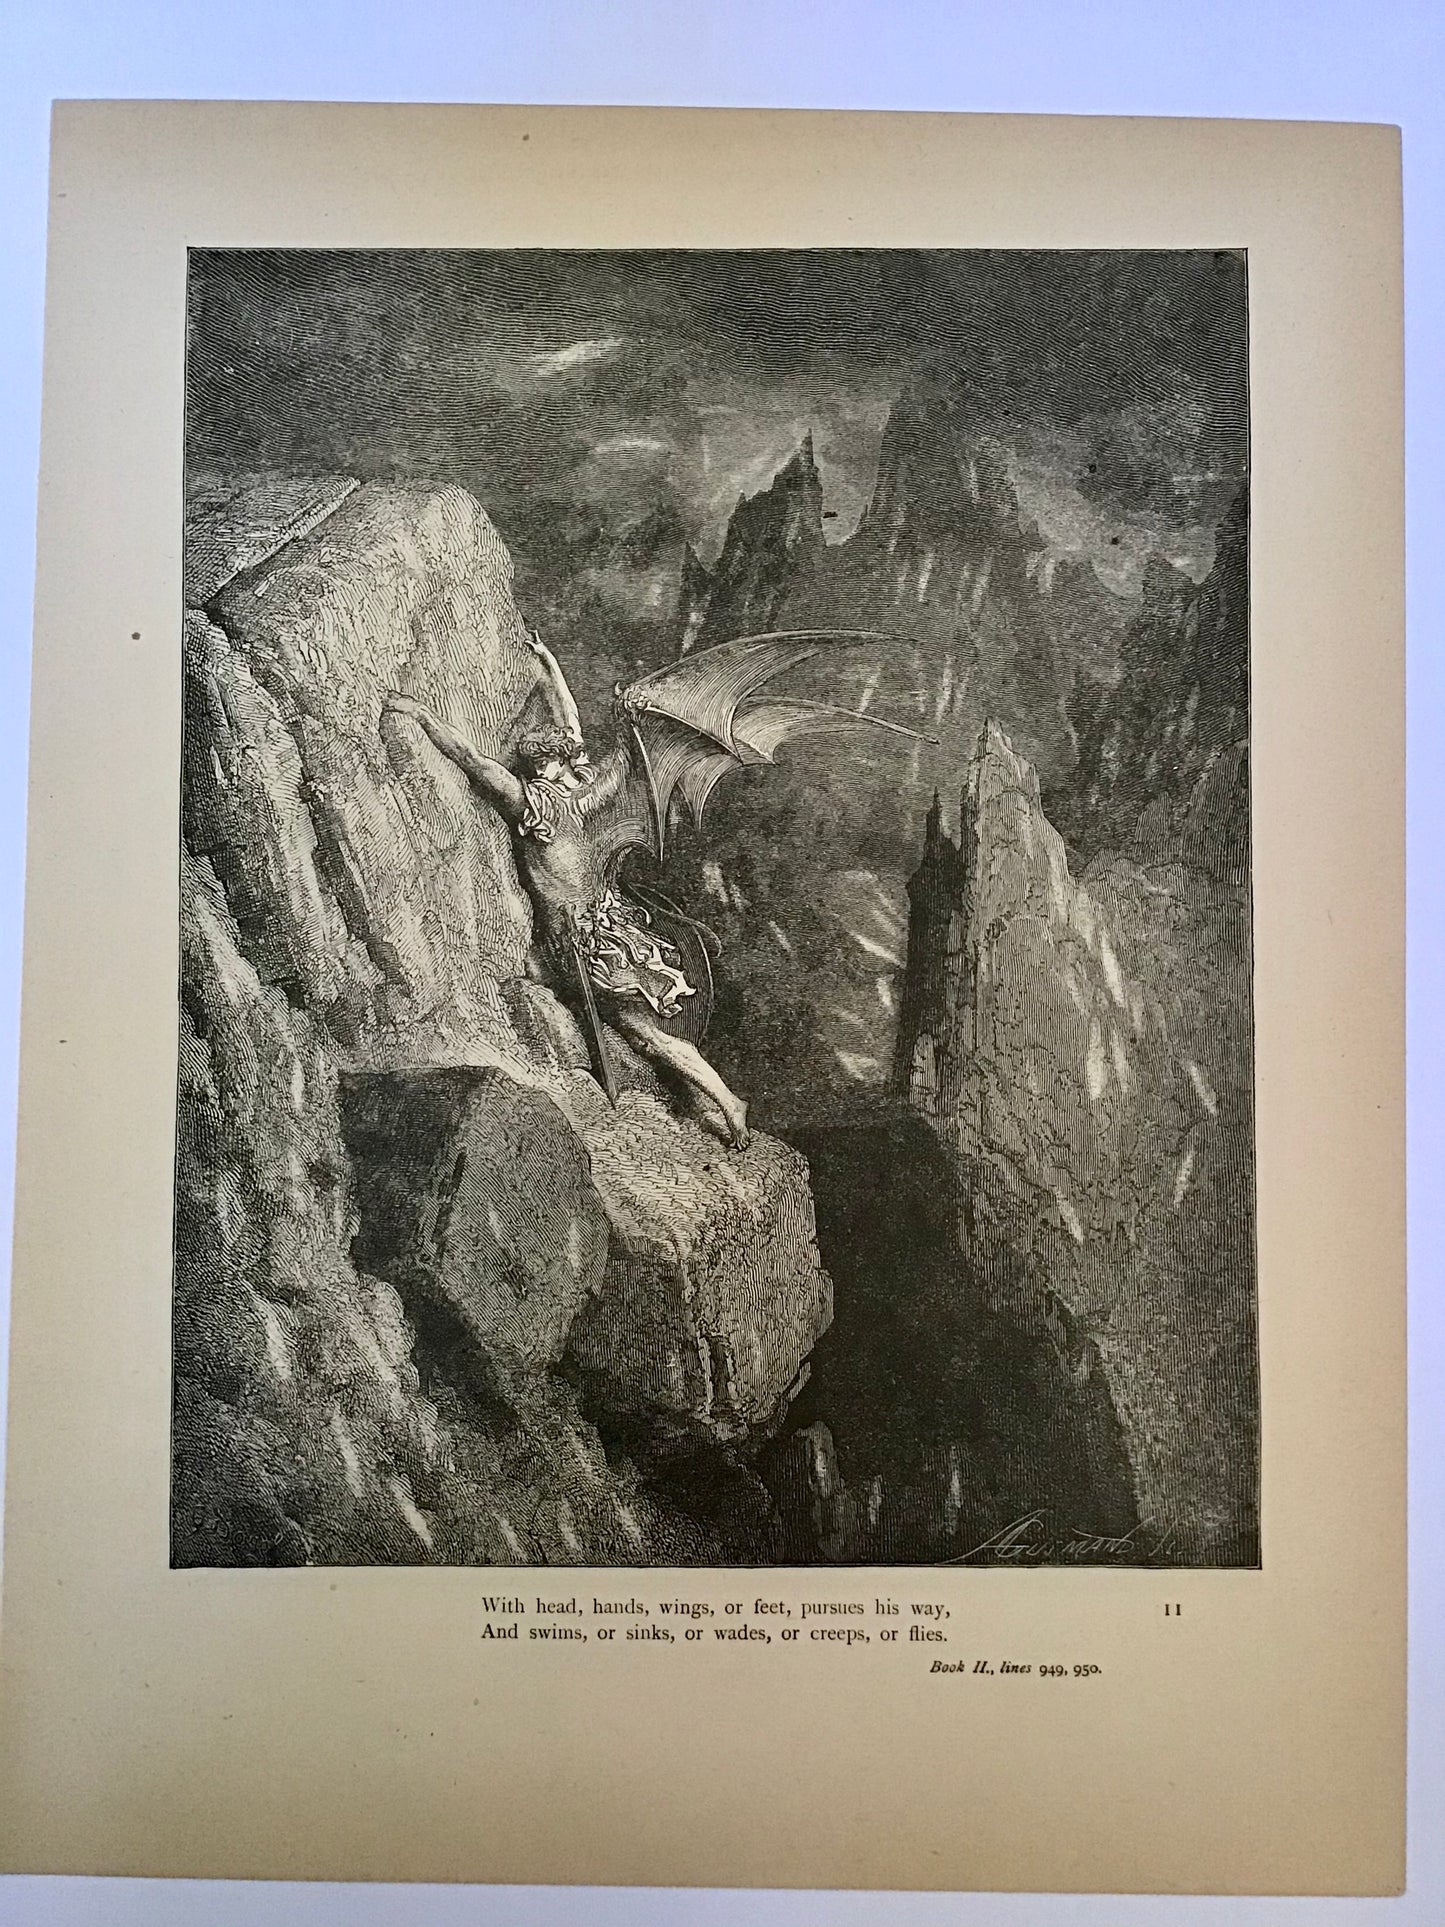 Gustave Doré Matted Print-Book II 949, 950